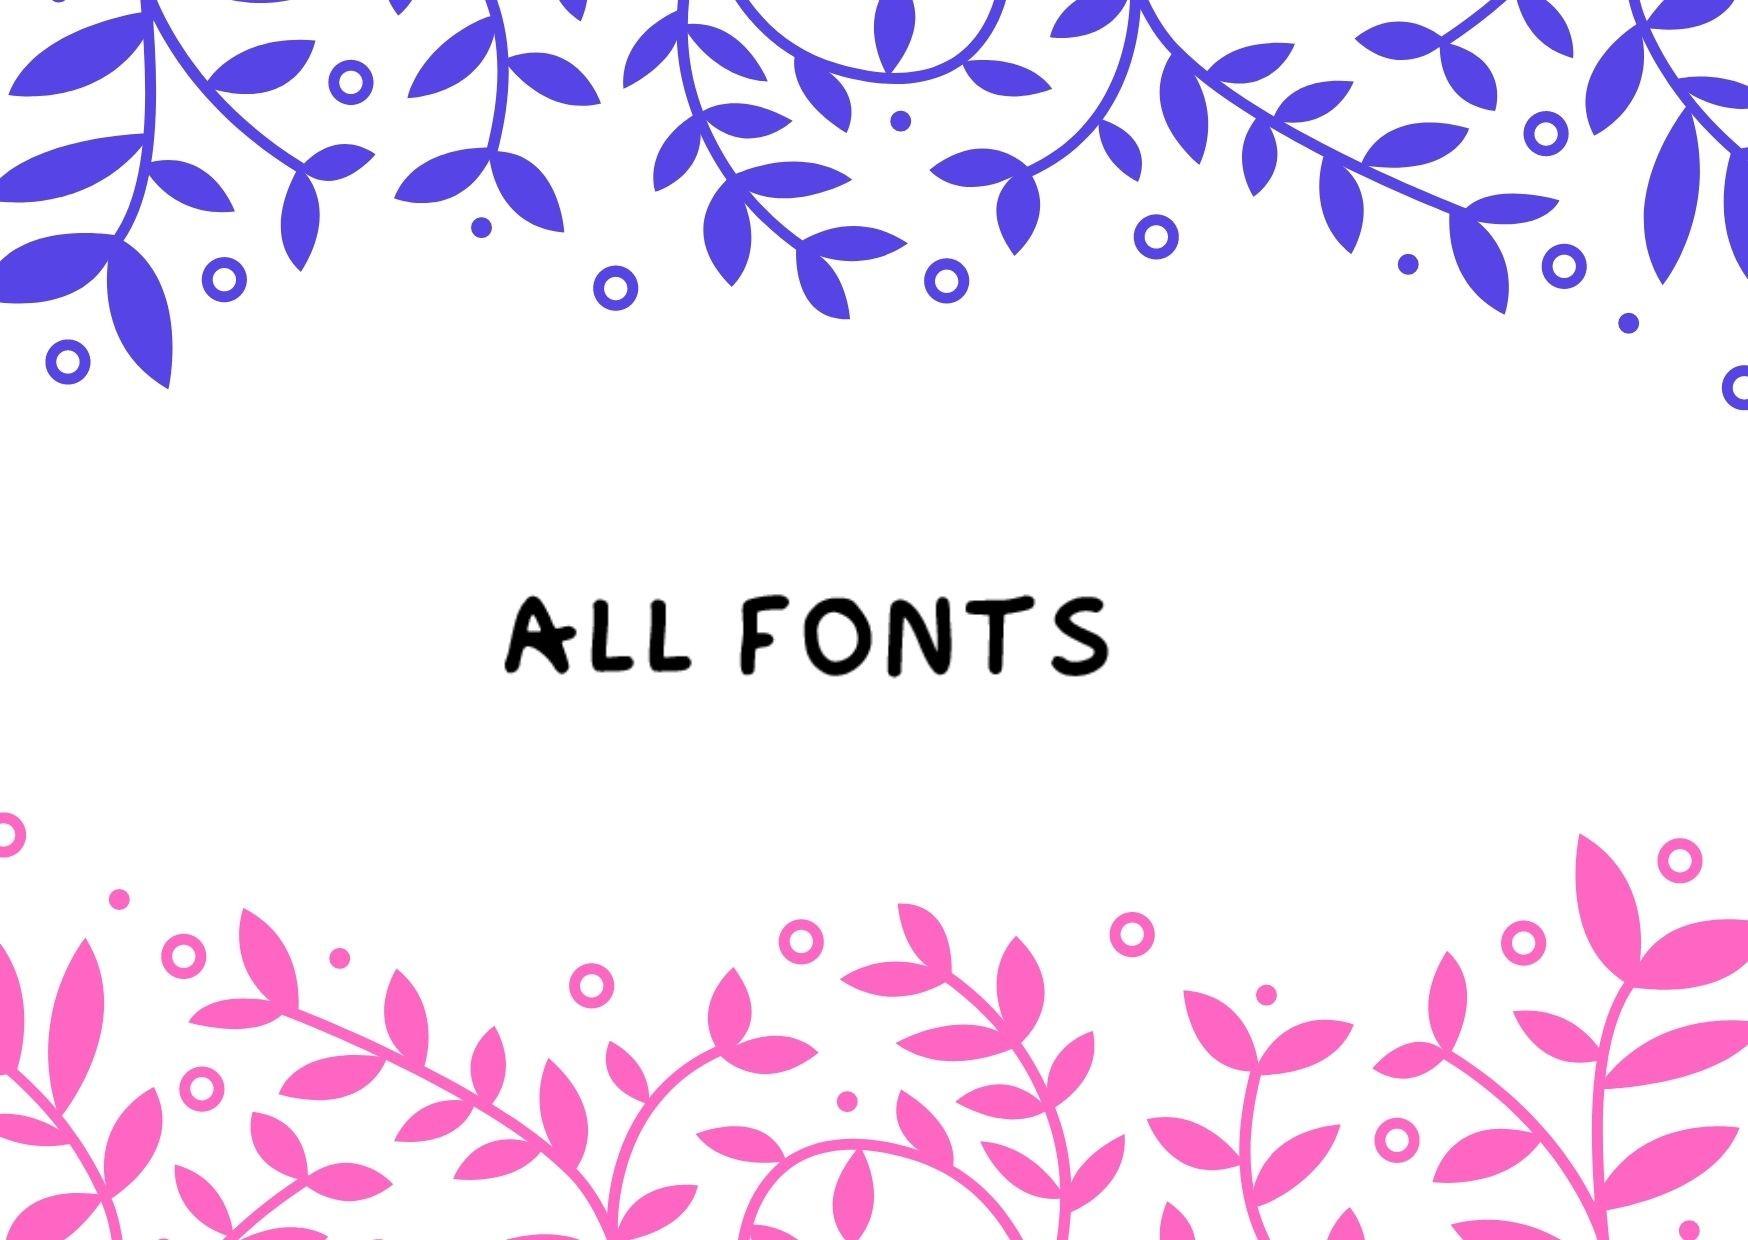 All Fonts Font